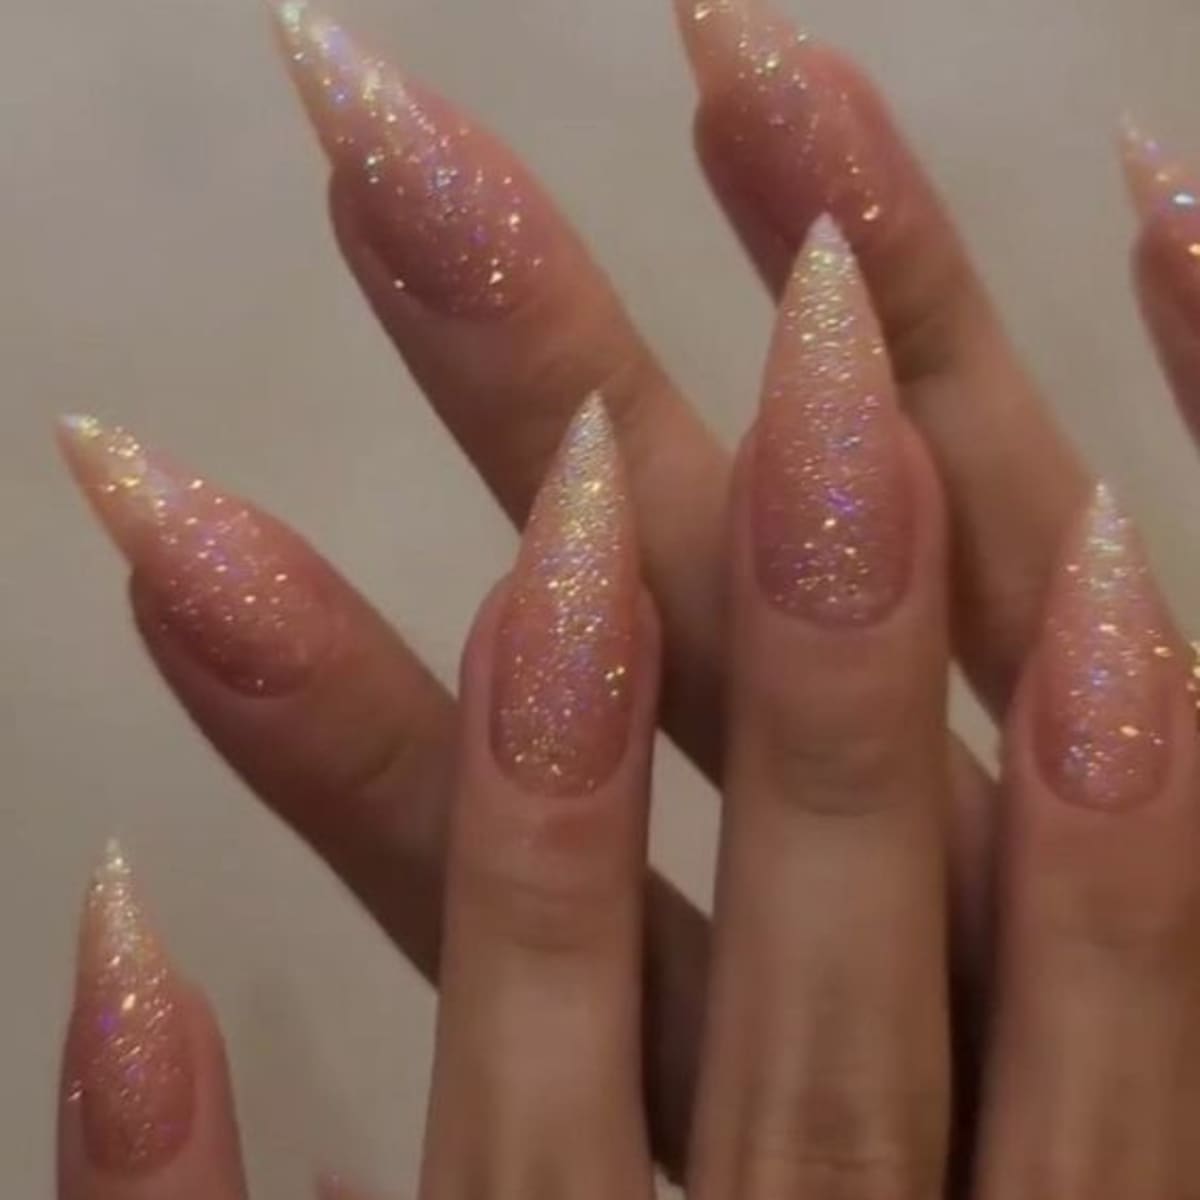 The Golden Hour - Reverse Glitter Gradient Nails